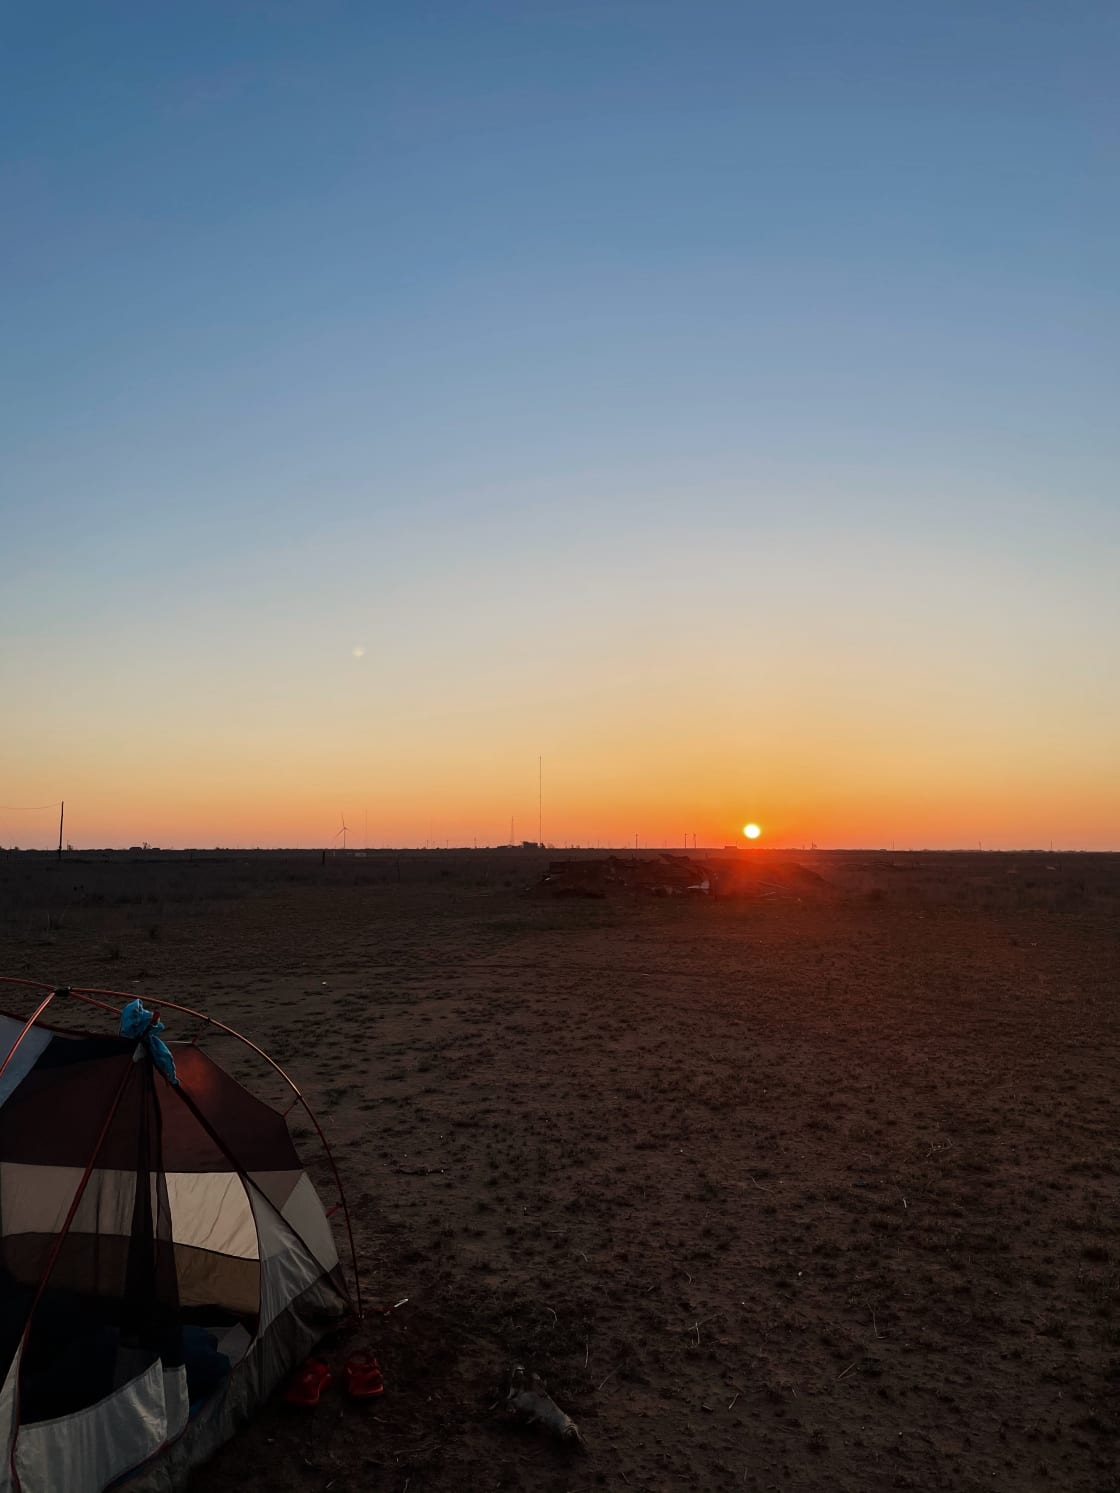 Sunrise Plains in Texas